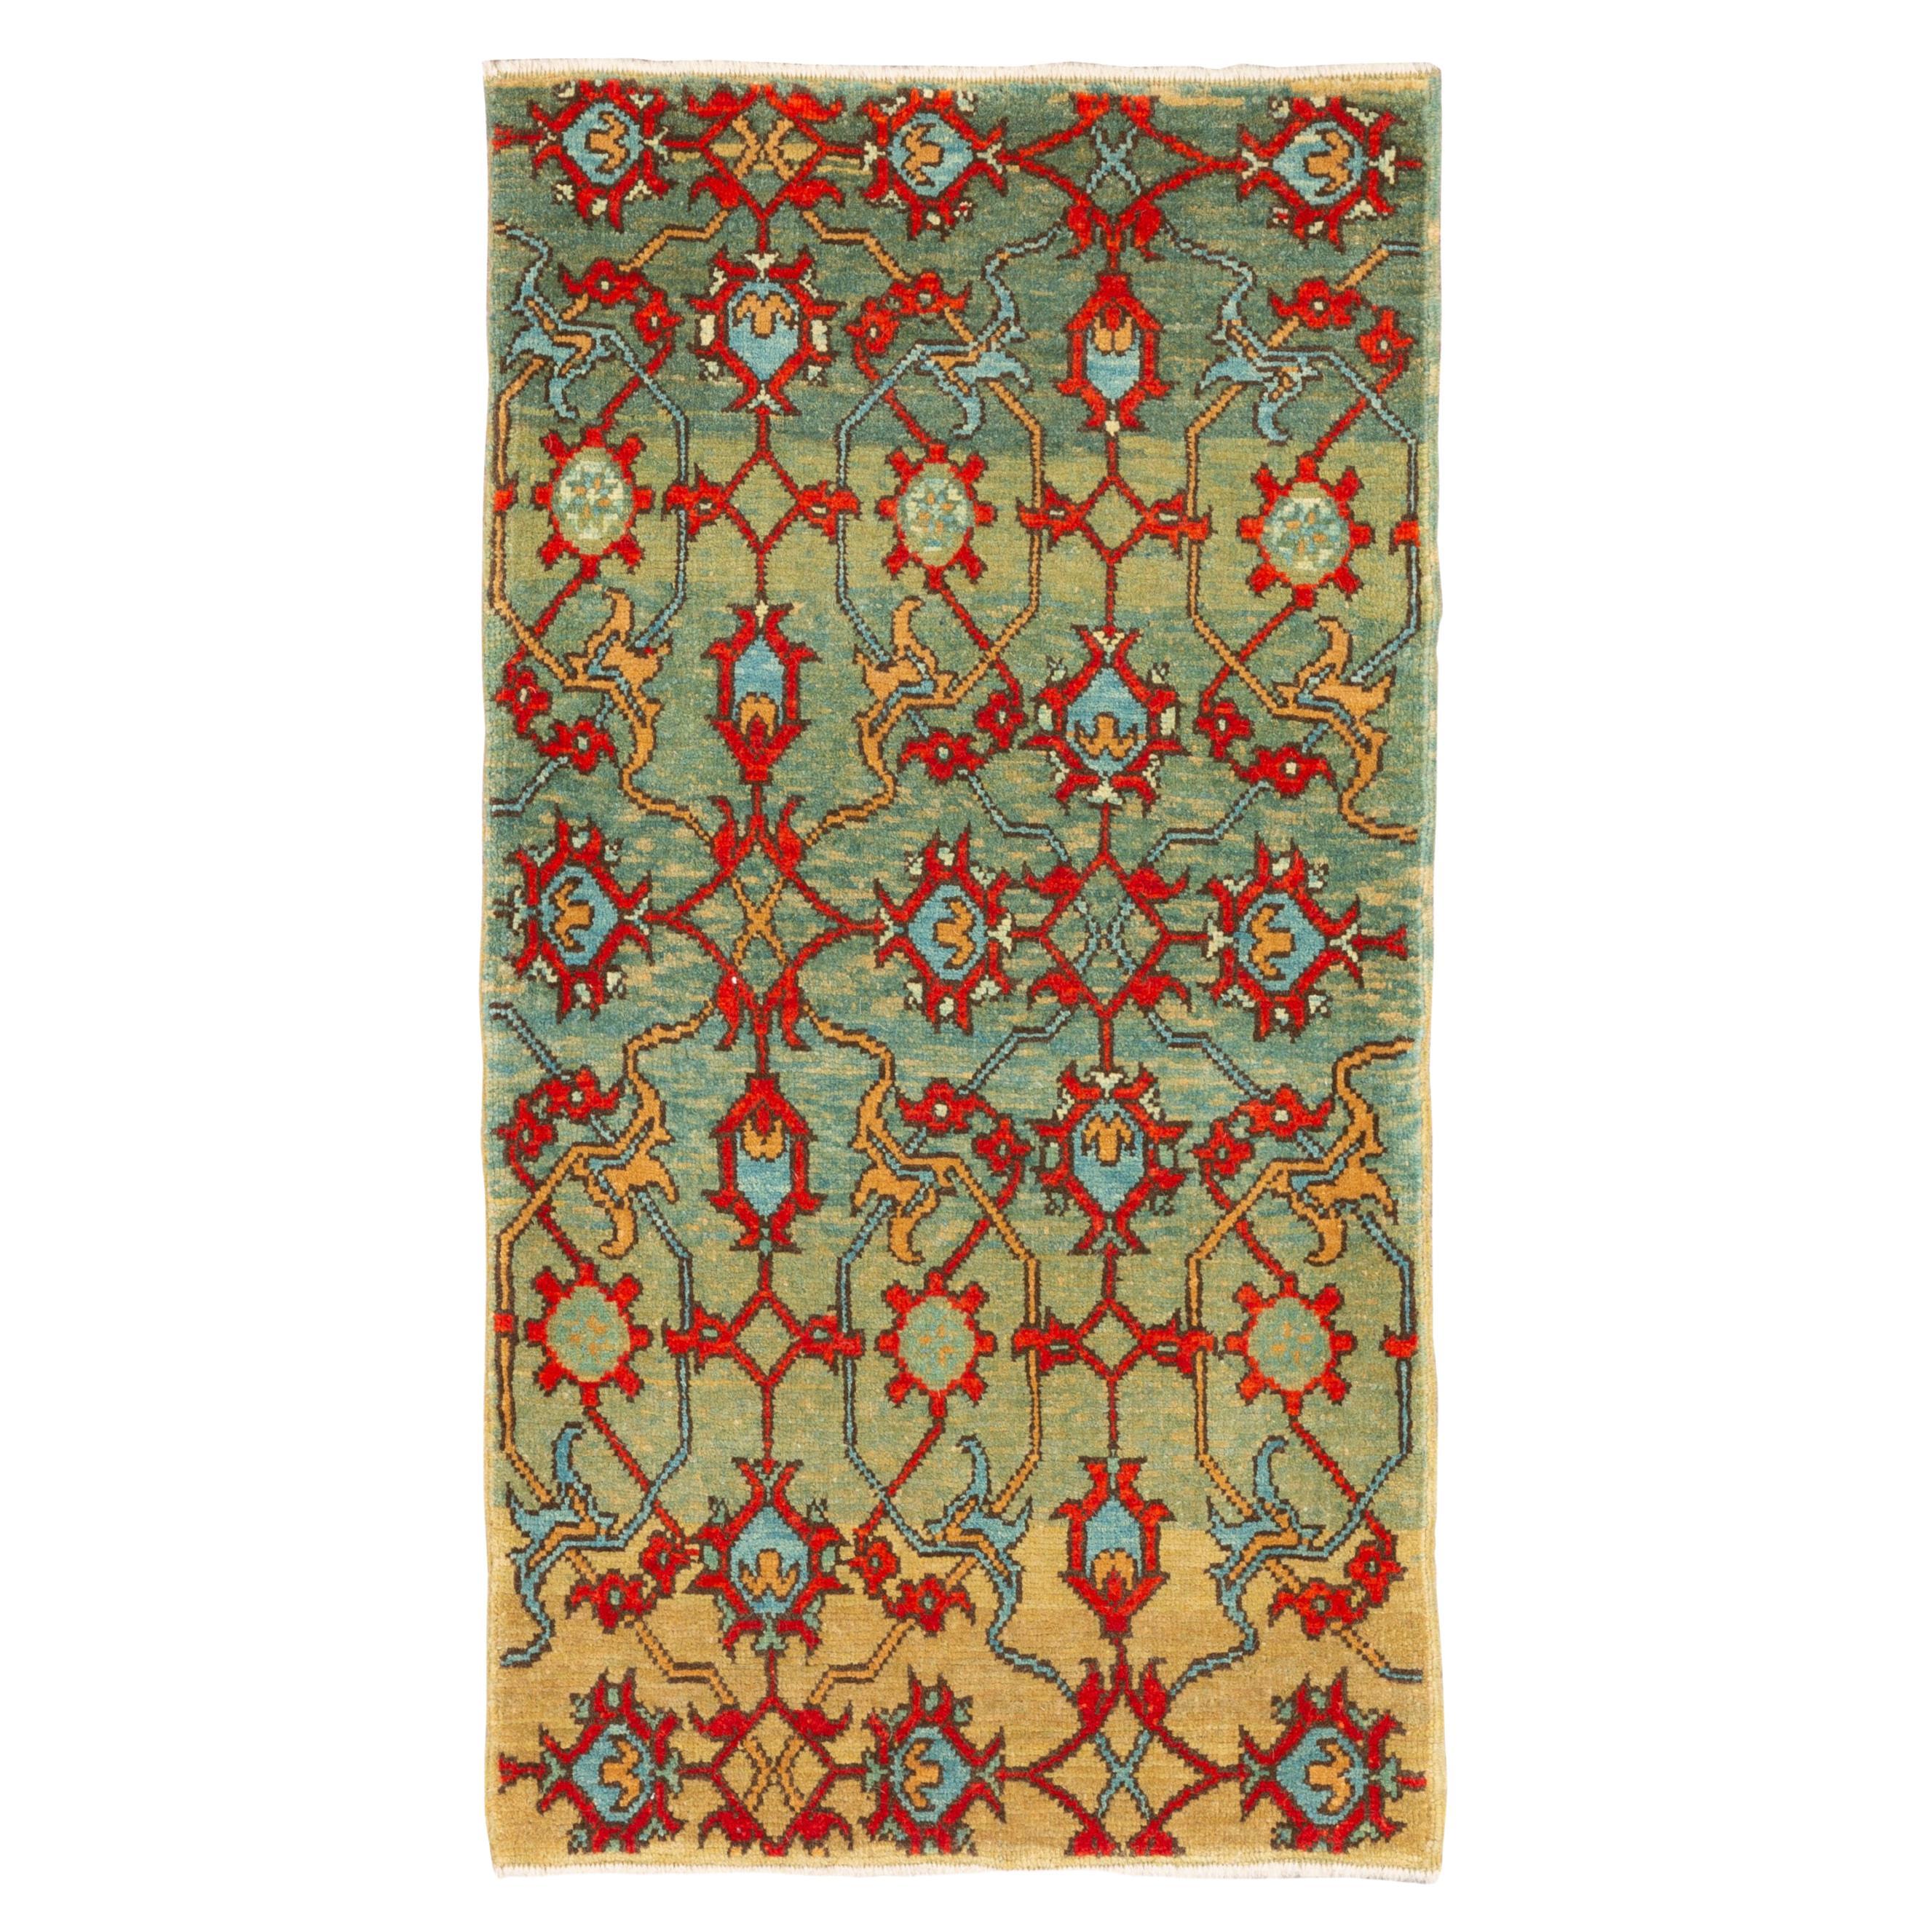 Ararat Rugs Mamluk Wagireh Rug with Palmette Lattice Revival Carpet Natural Dyed For Sale